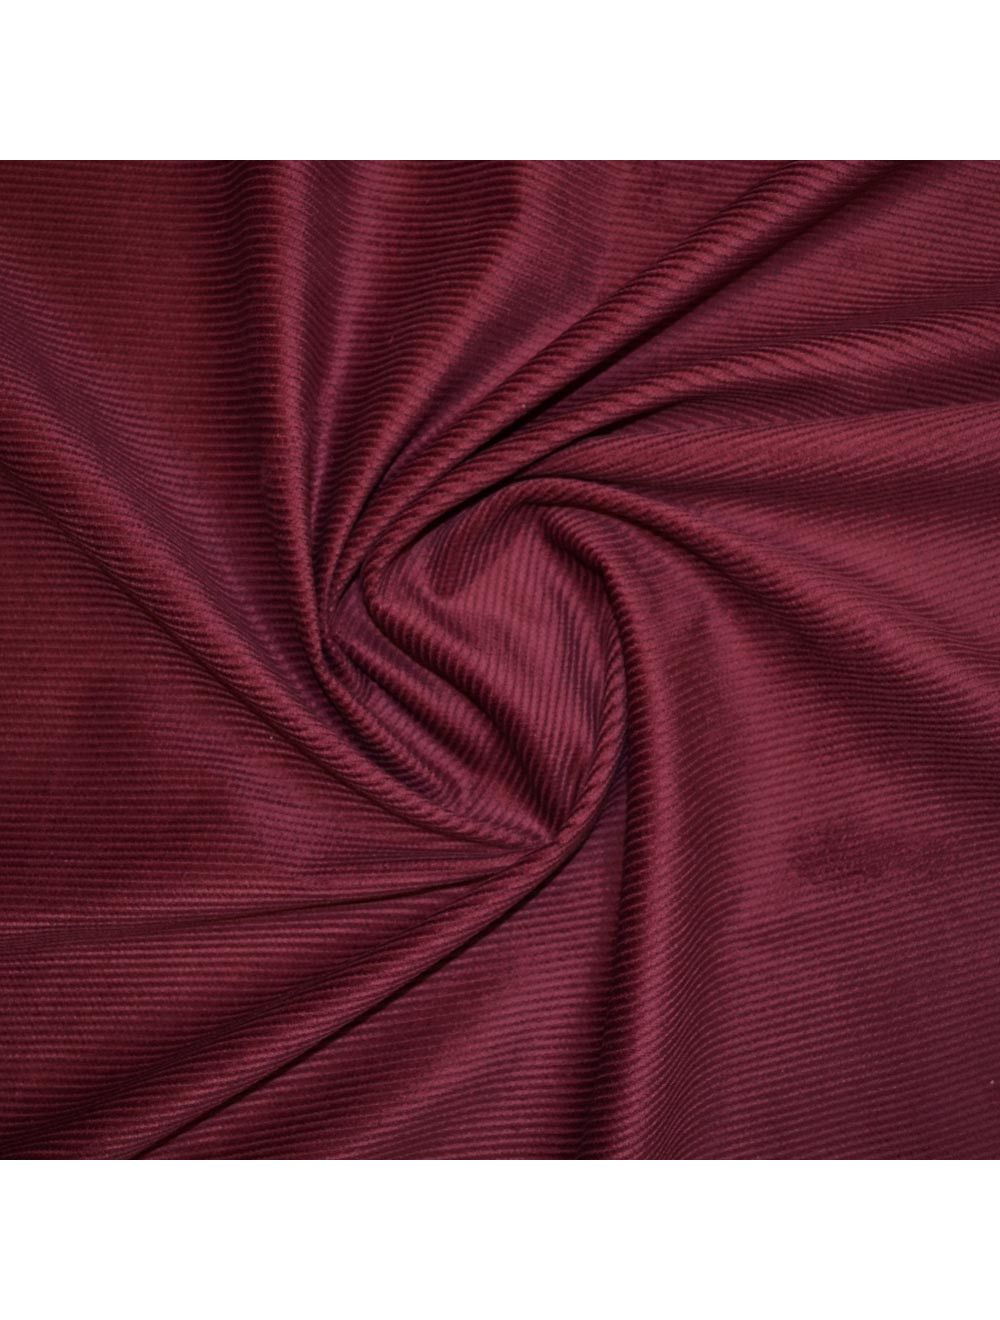 Heavyduty Cotton Fabric Per Meter 152cm Wide Burgundy